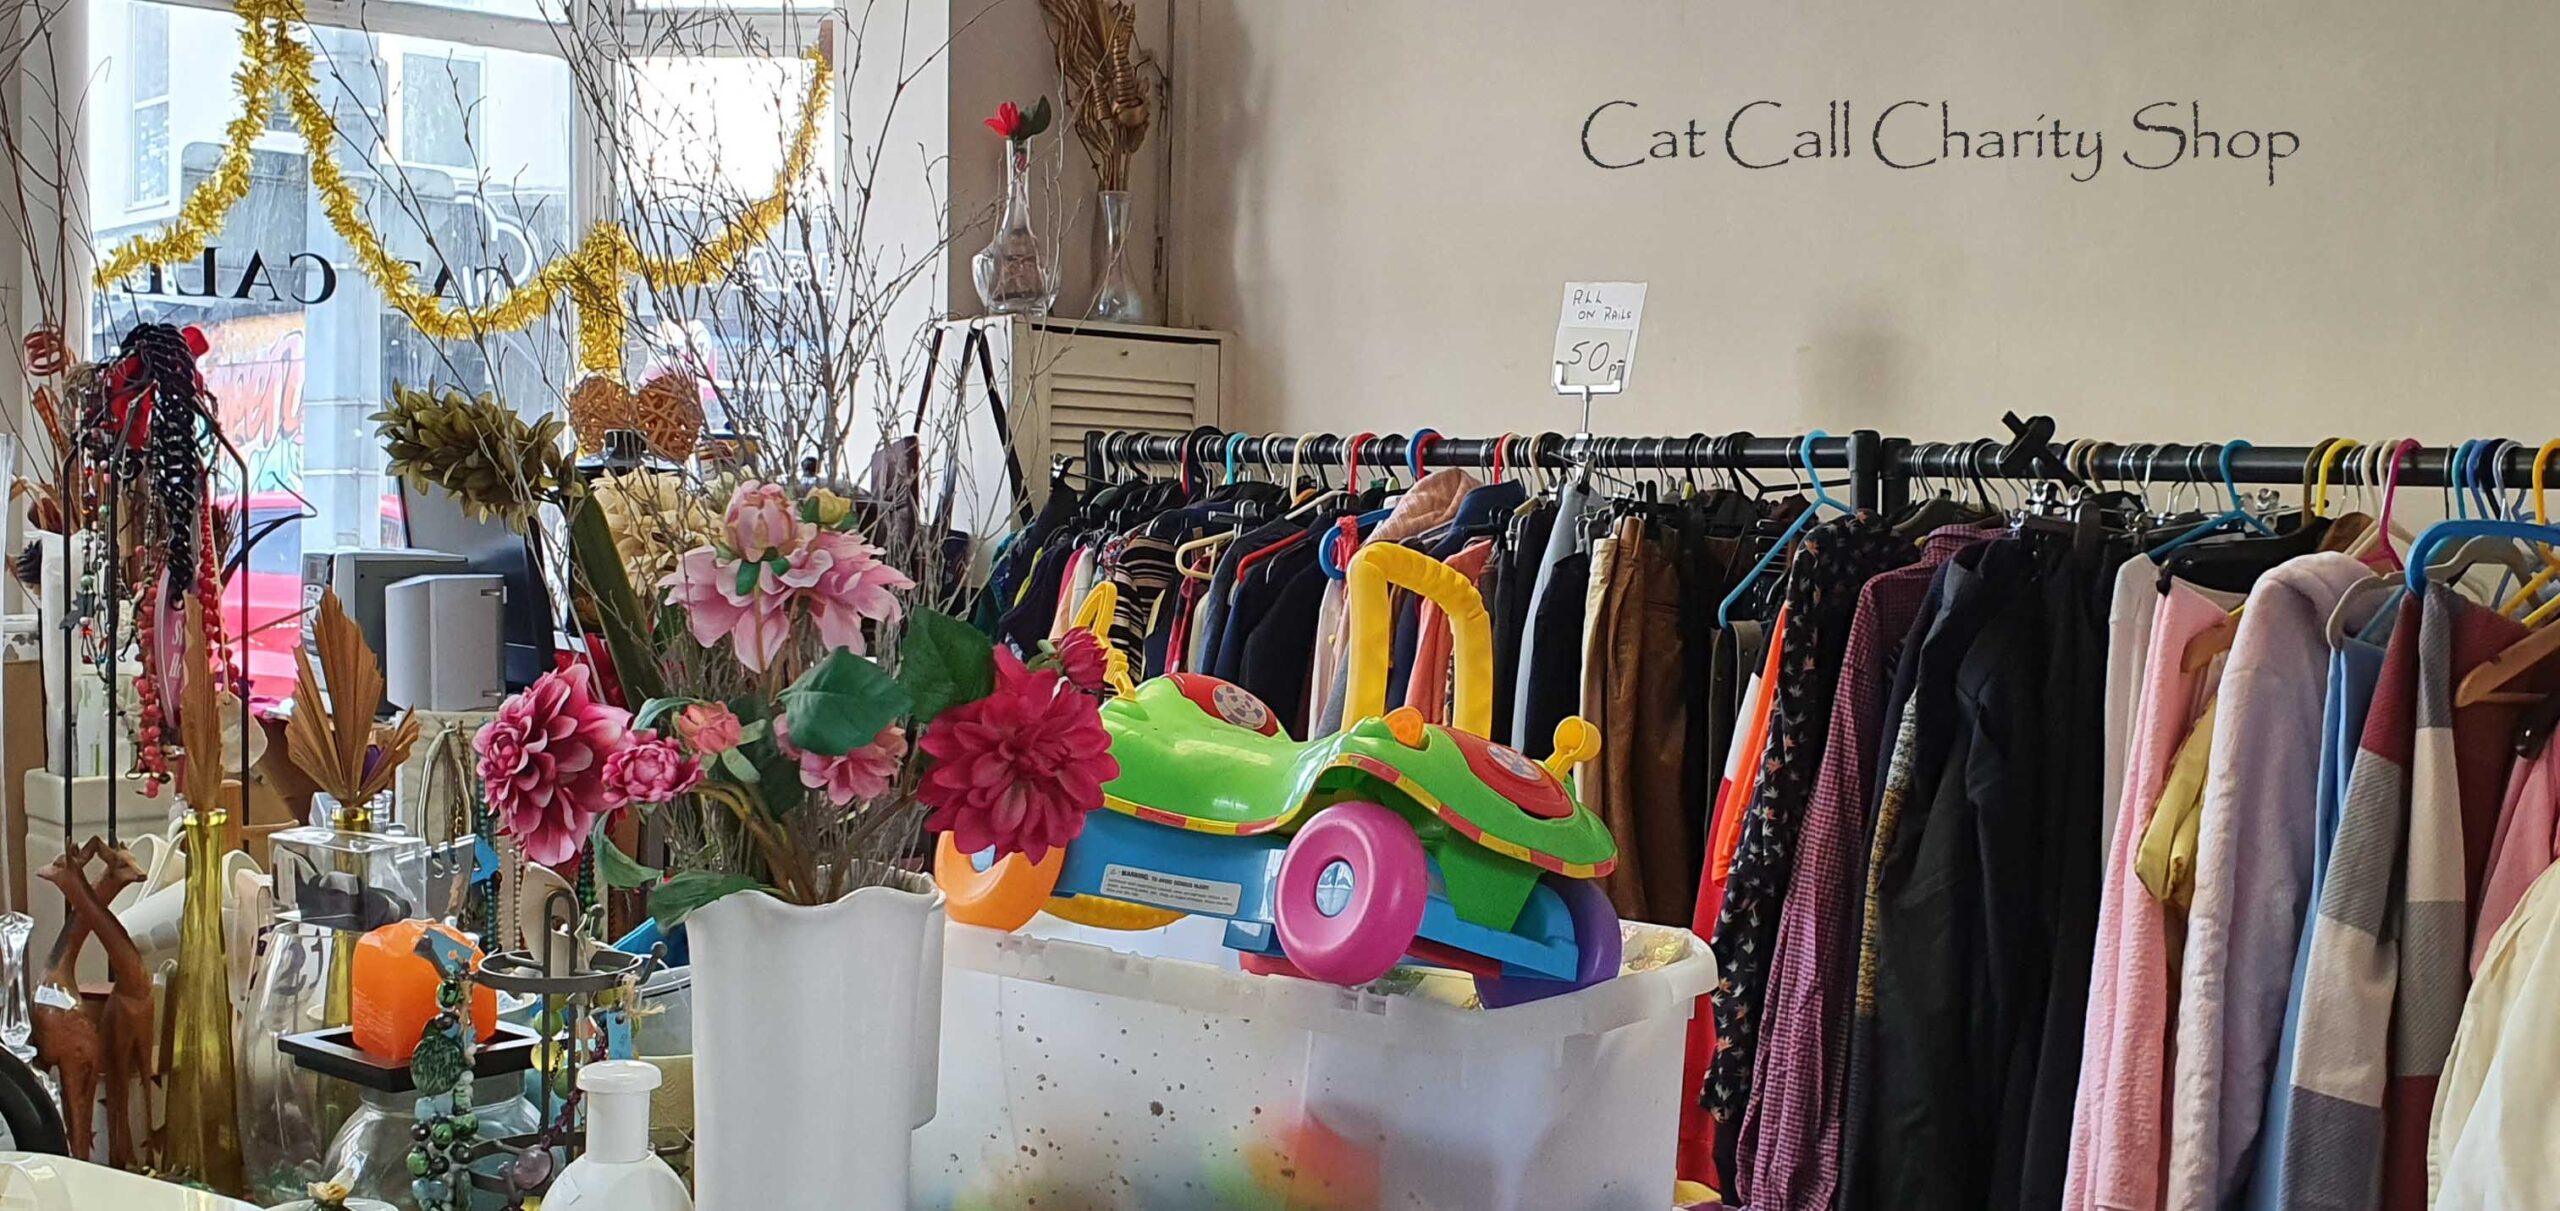 Cat Call charity shop in the Bohemia creative quarter